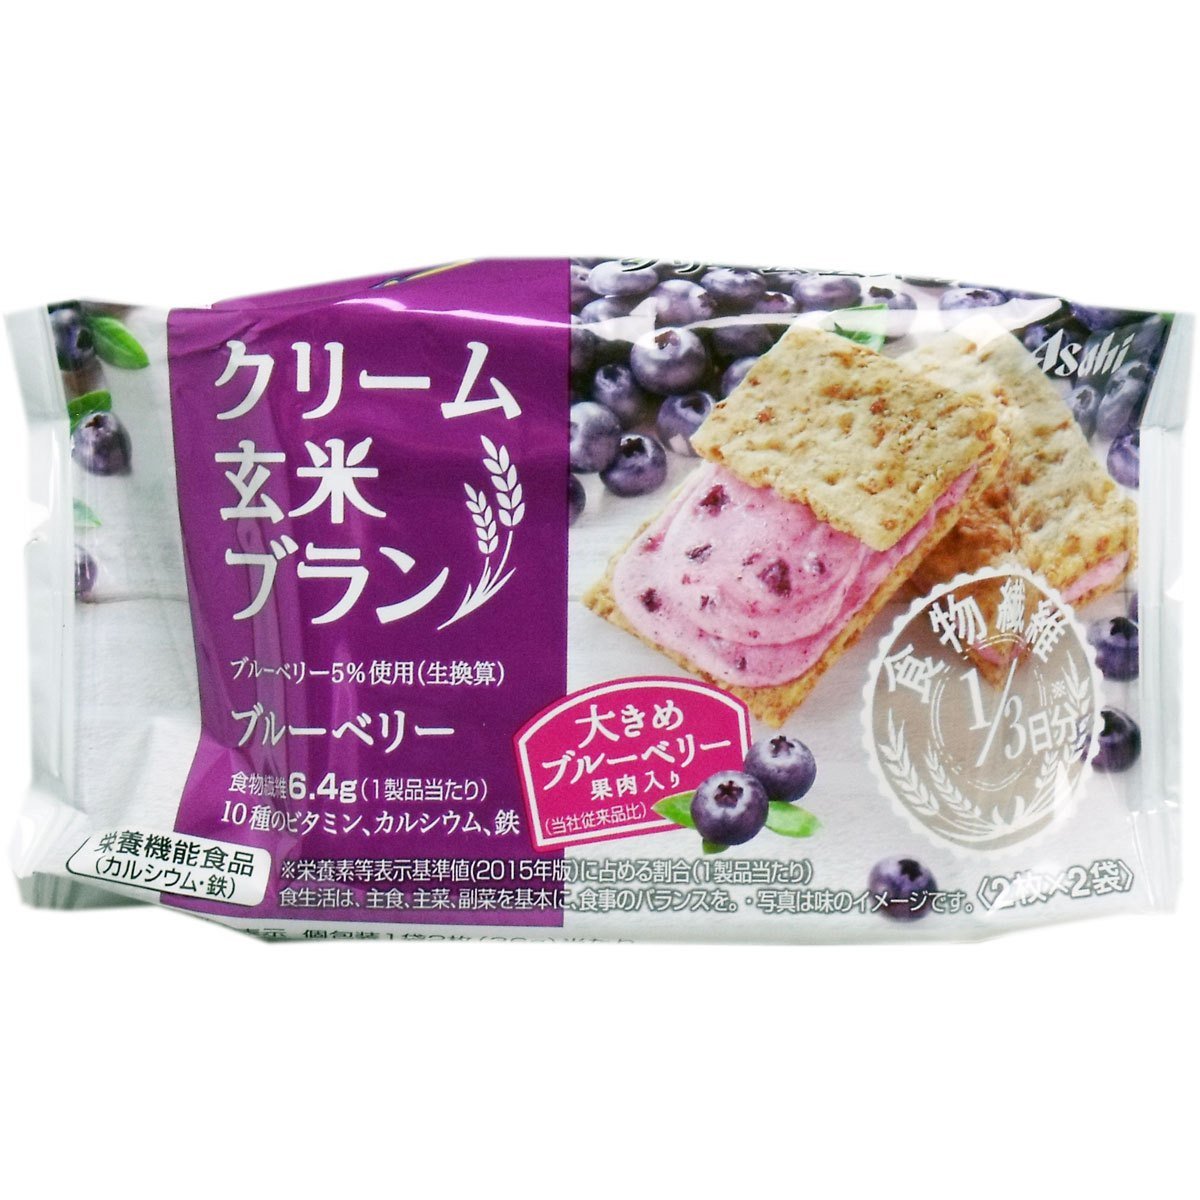 Are Pop Tarts Healthy For Breakfast
 The Poptart Alternative in Japan